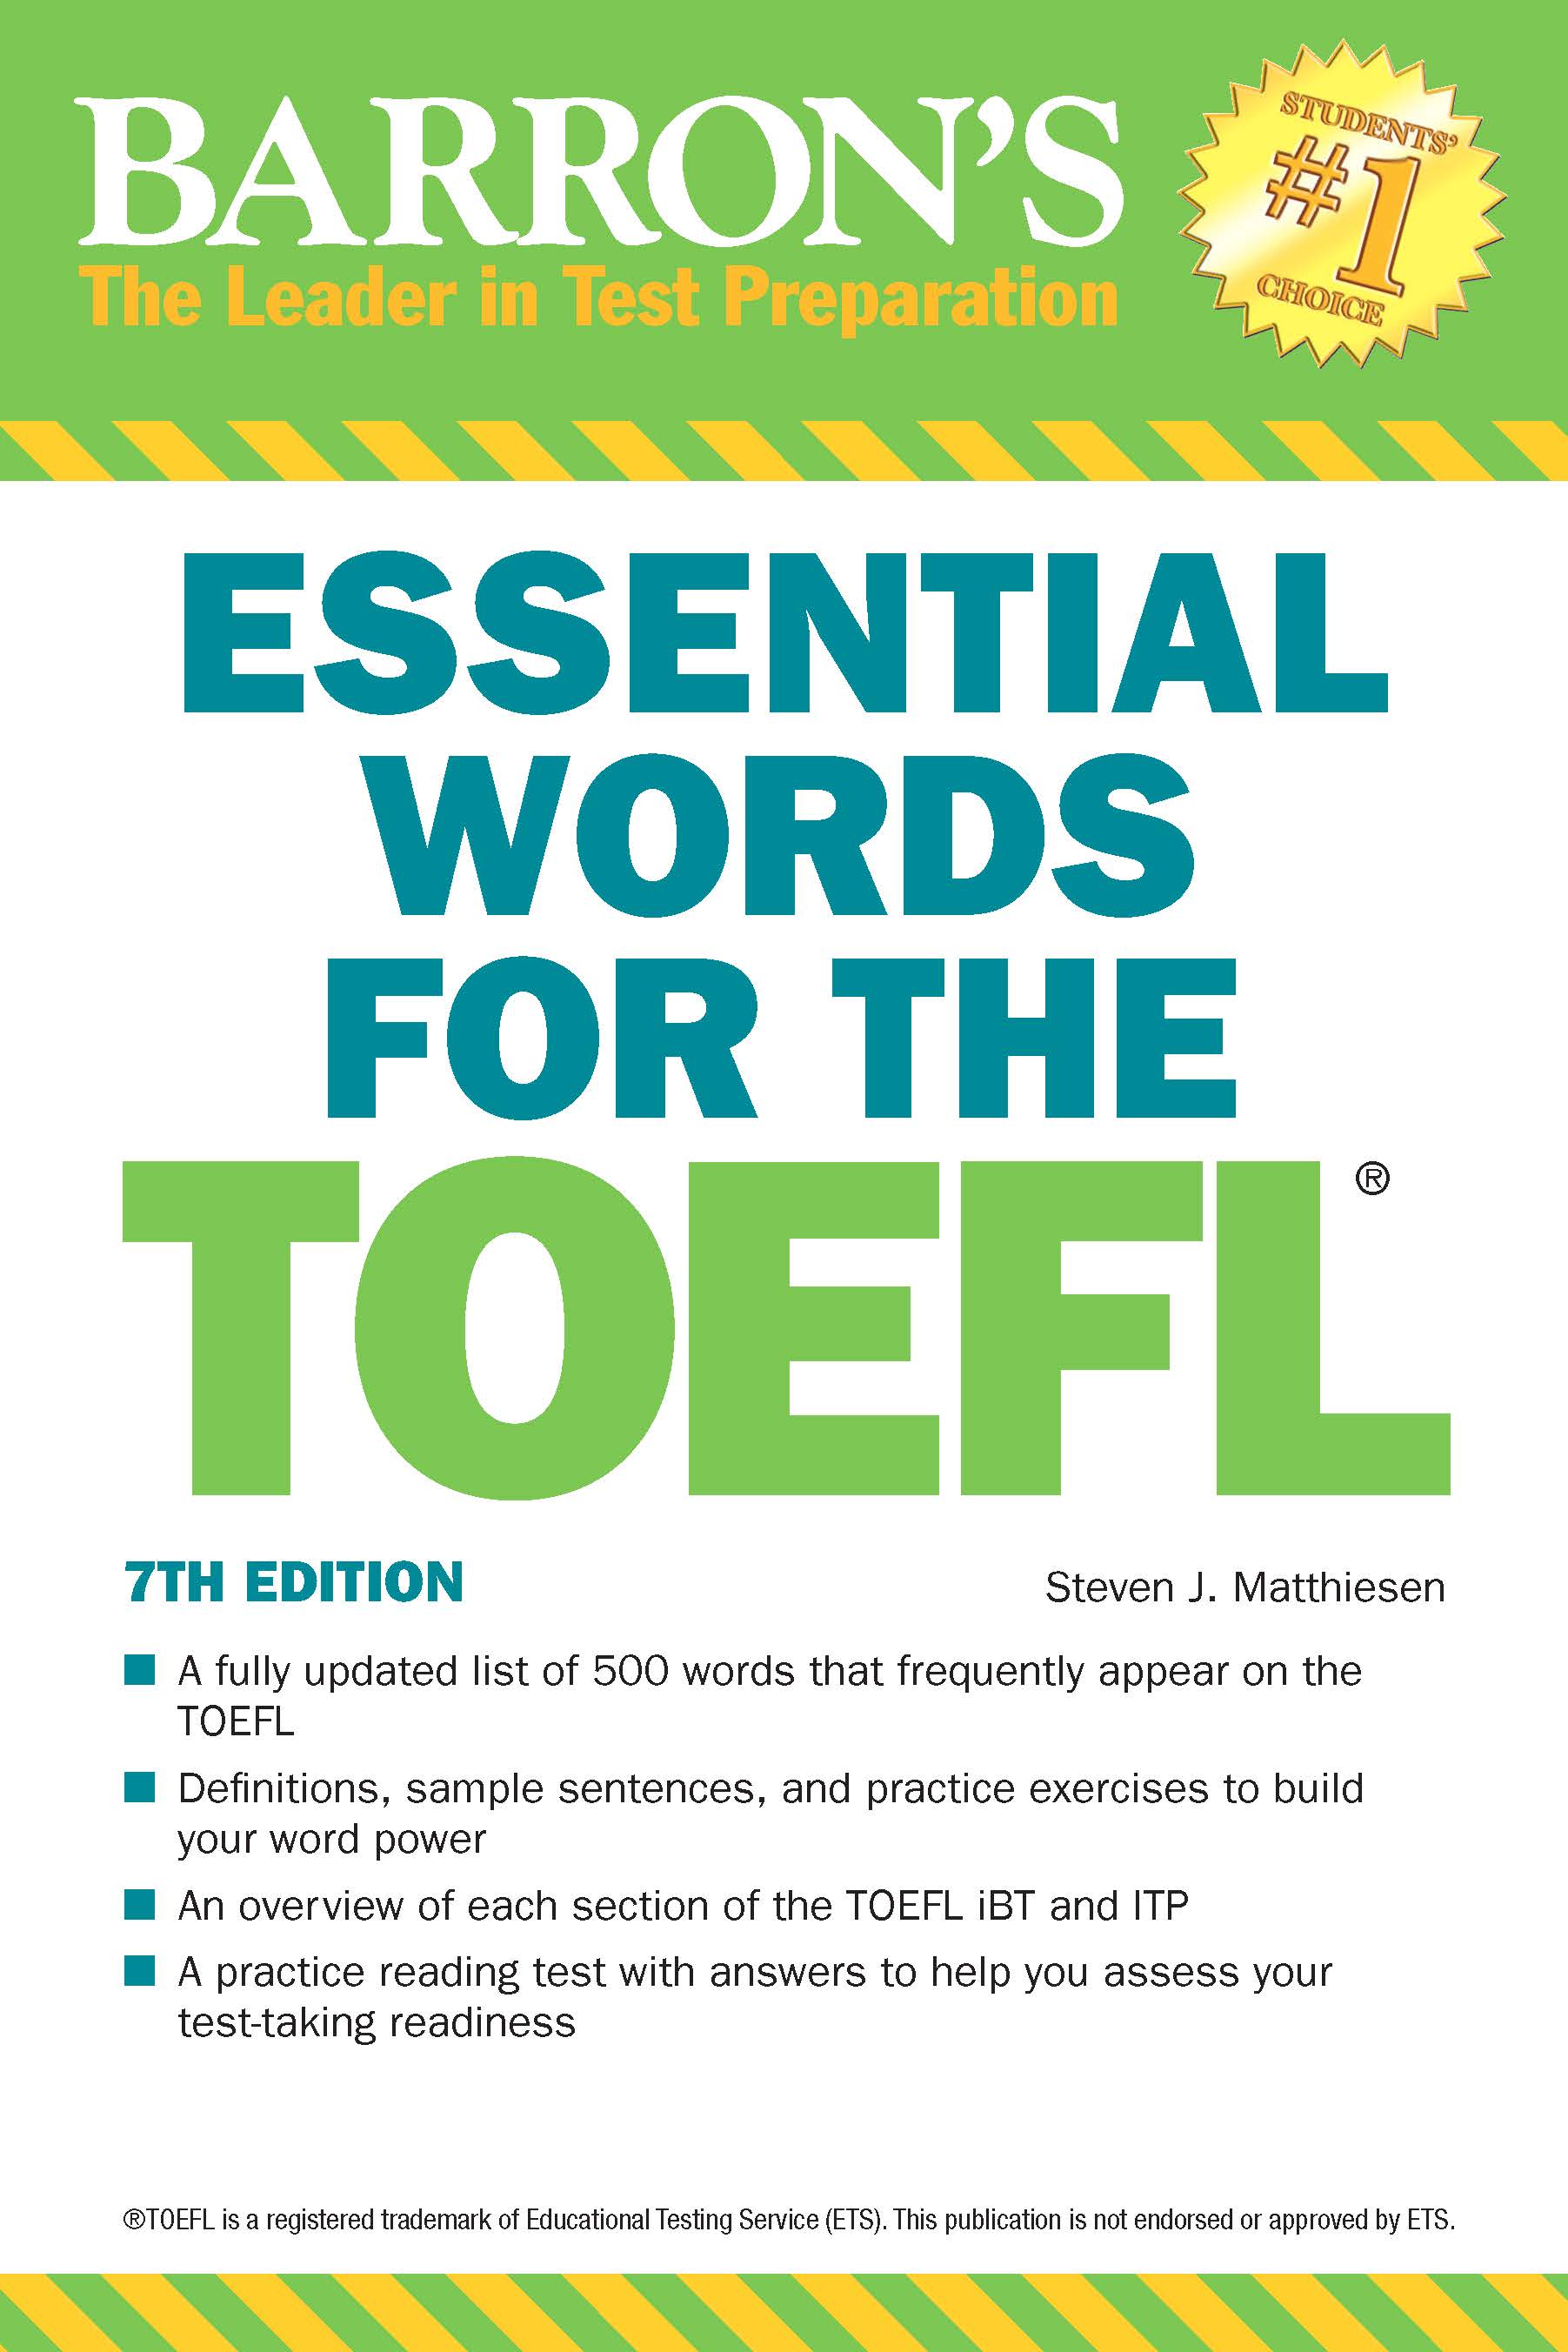 toefl essay book pdf